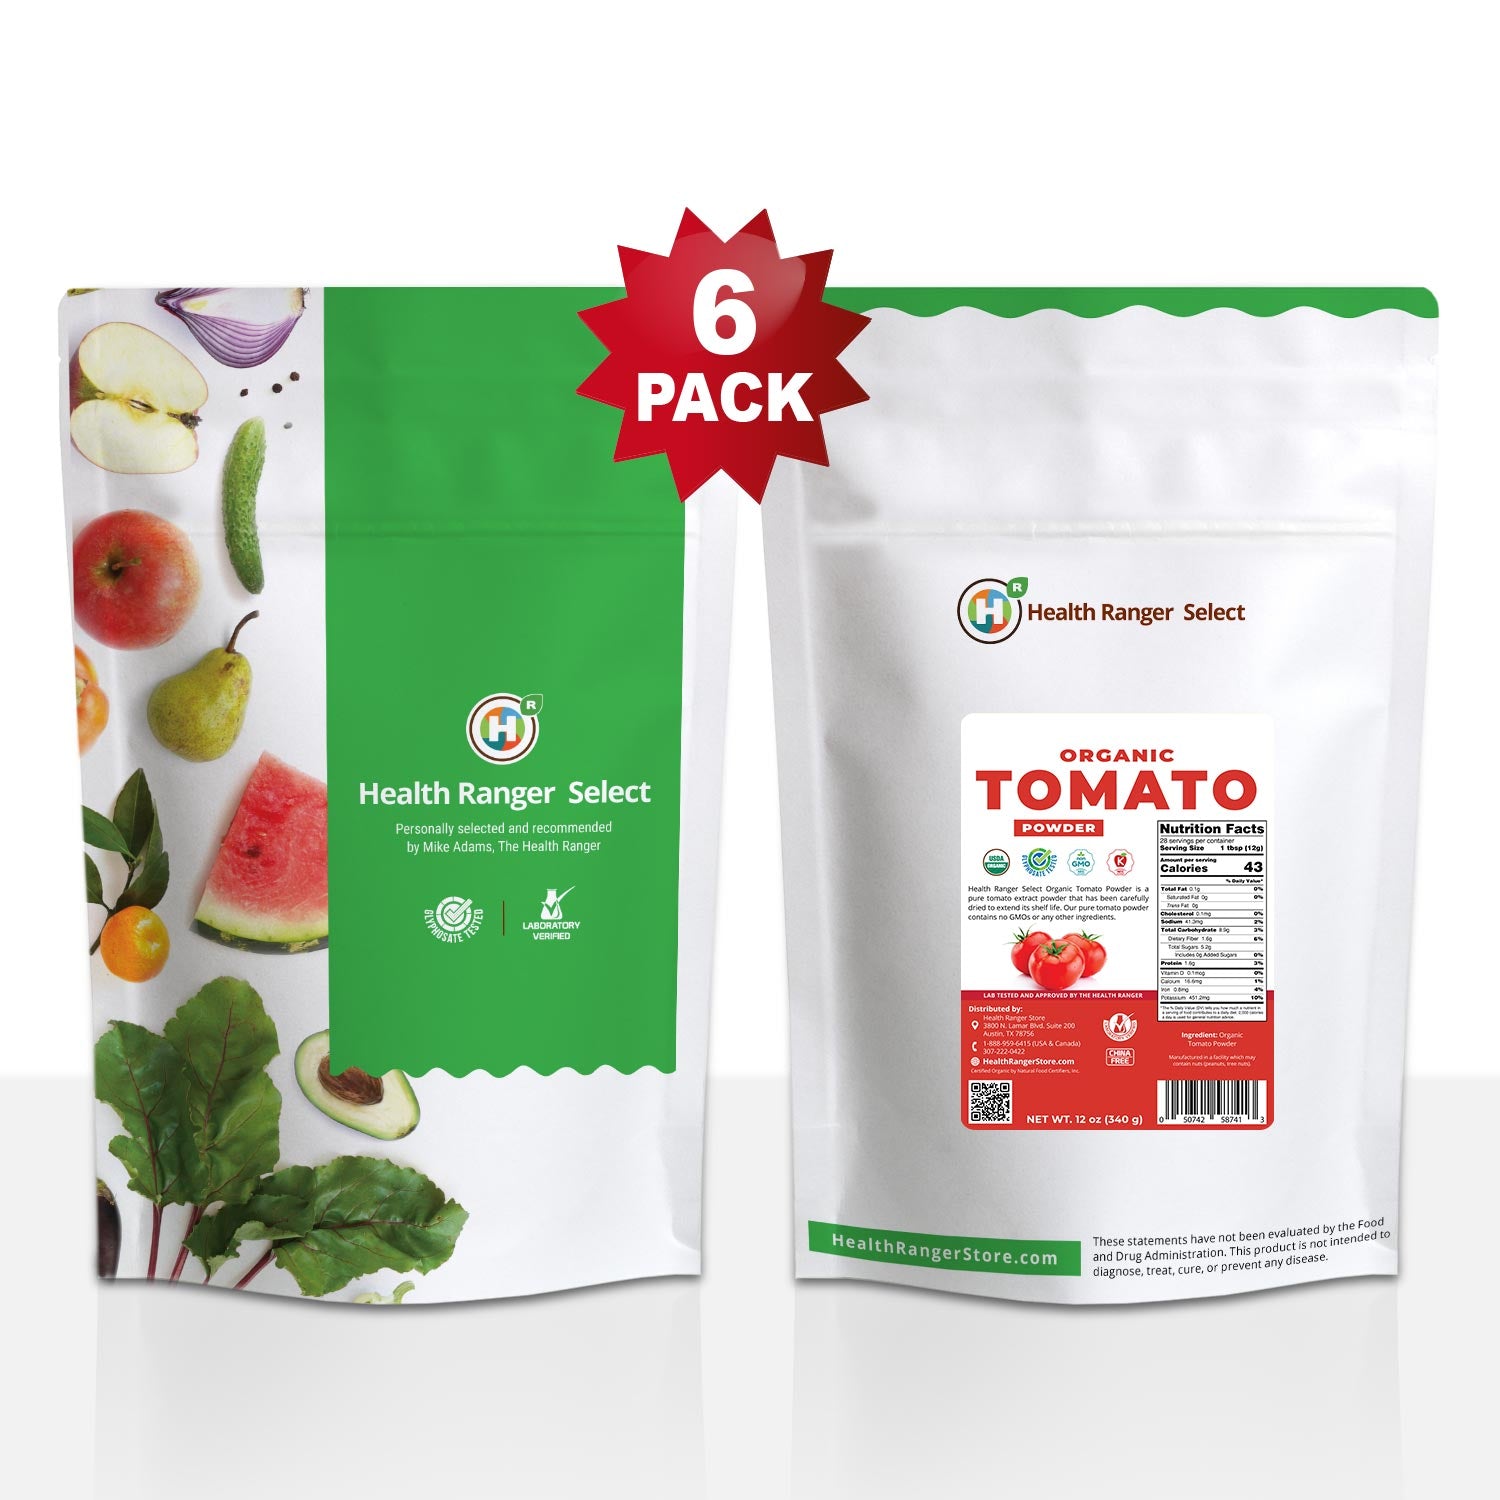 Organic Tomato Powder 12oz (340g) (6-Pack)